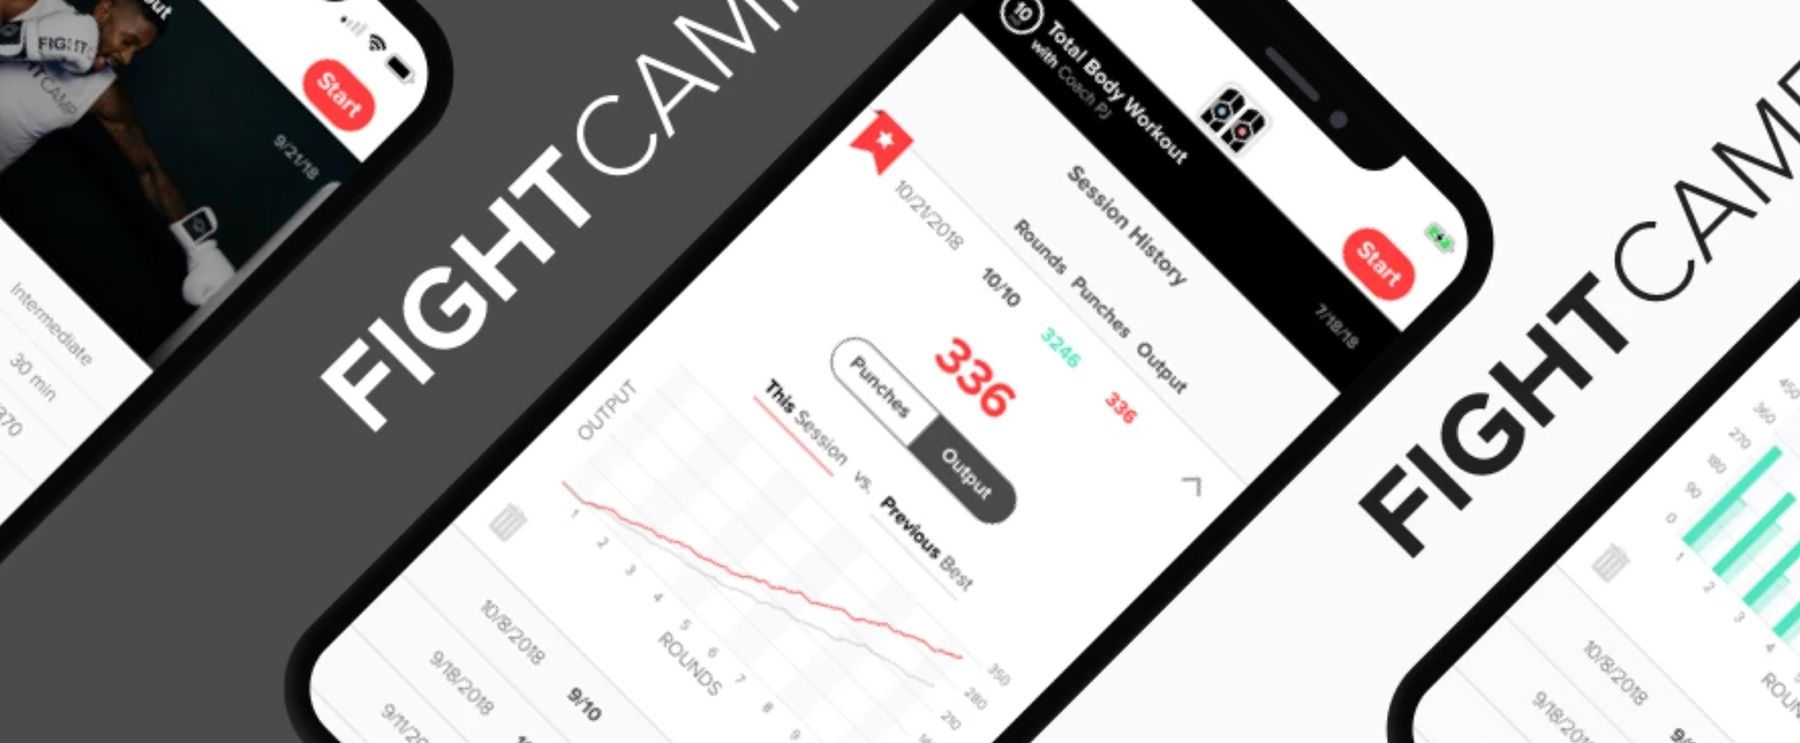 FightCamp App Update: Better Progress Tracking